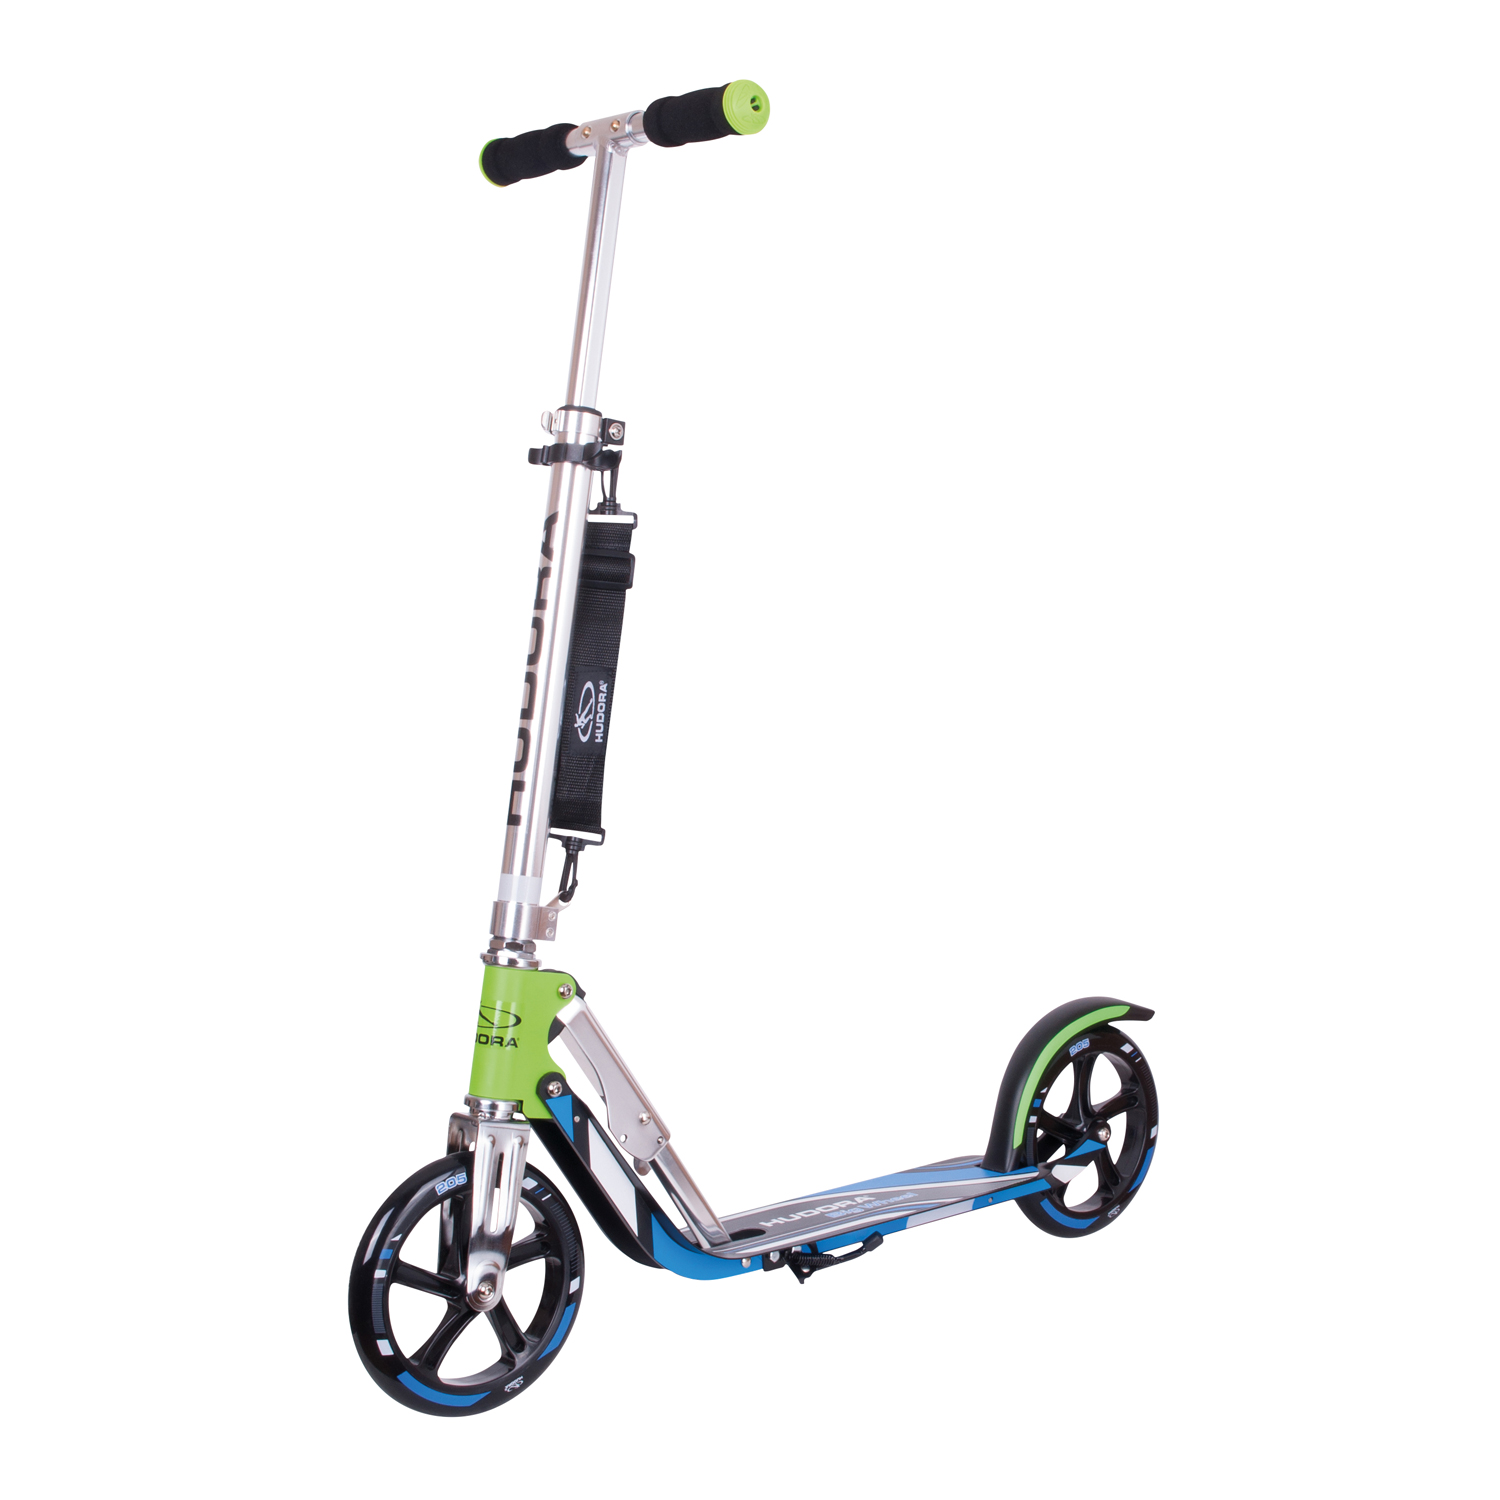 Hudora Scooter Big Wheel Step RX205 - Groen/Blauw